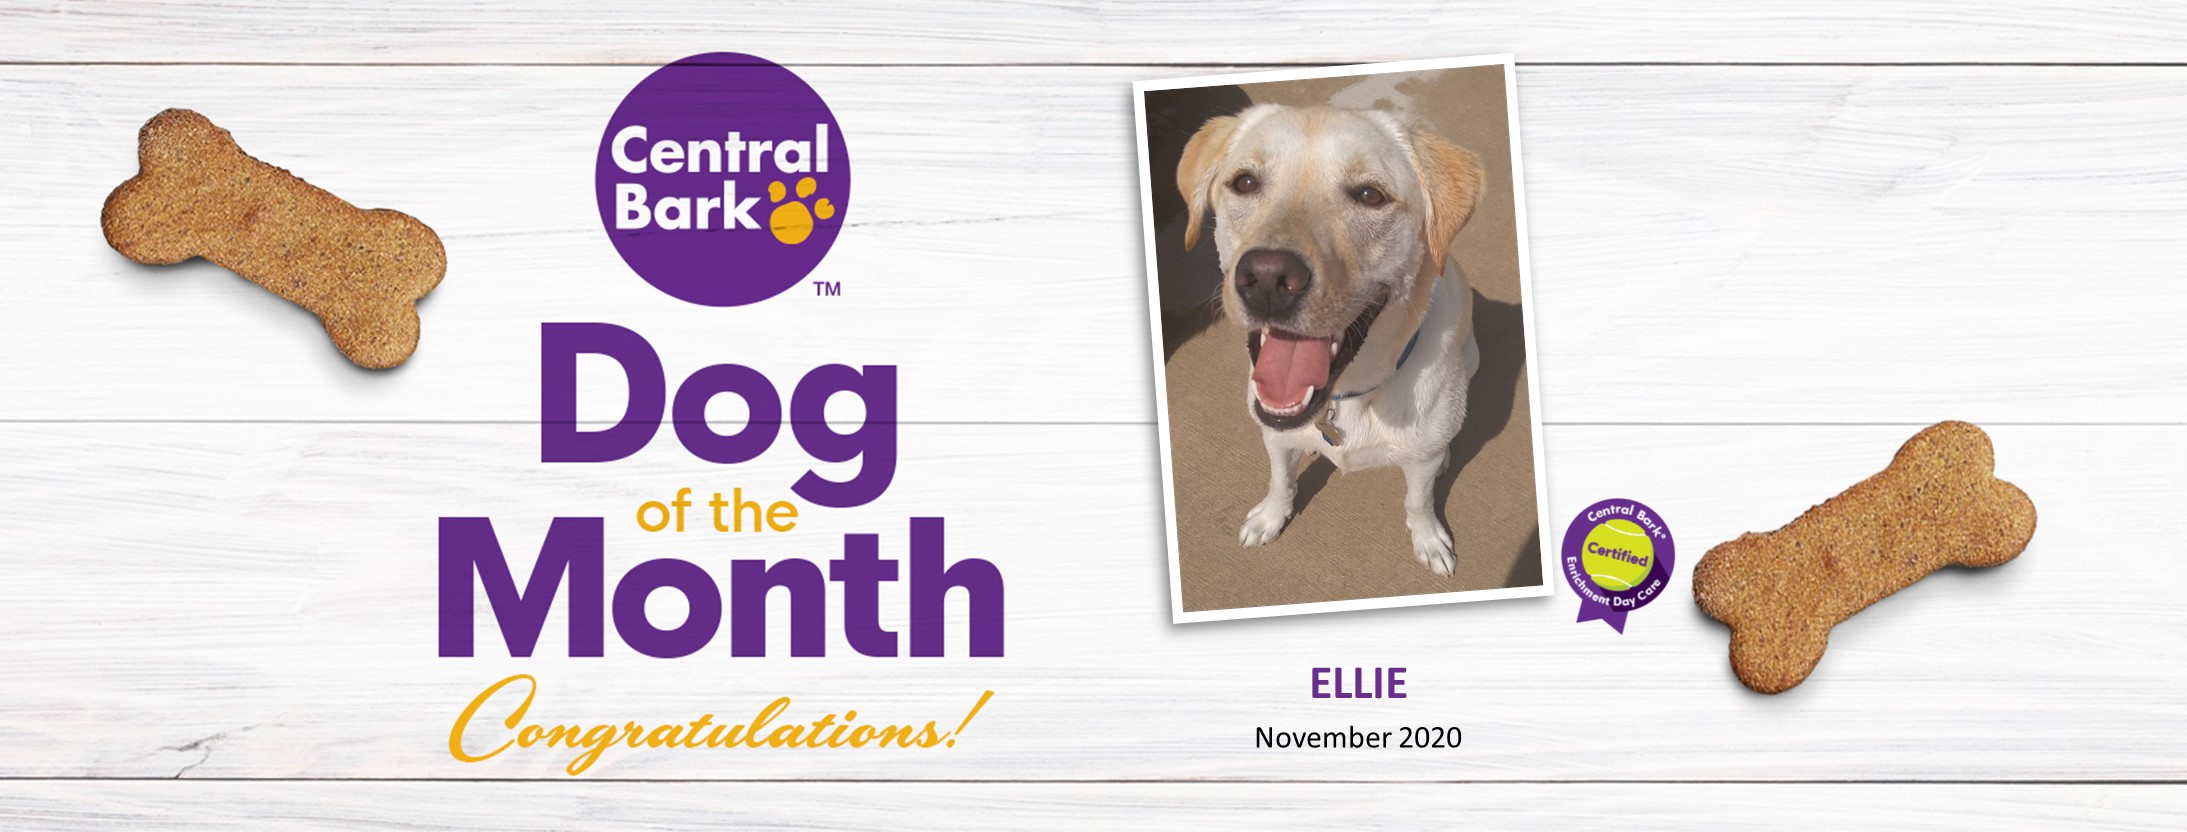 Central Bark Waukesha Dog Of The Month - November 2020 Ellie